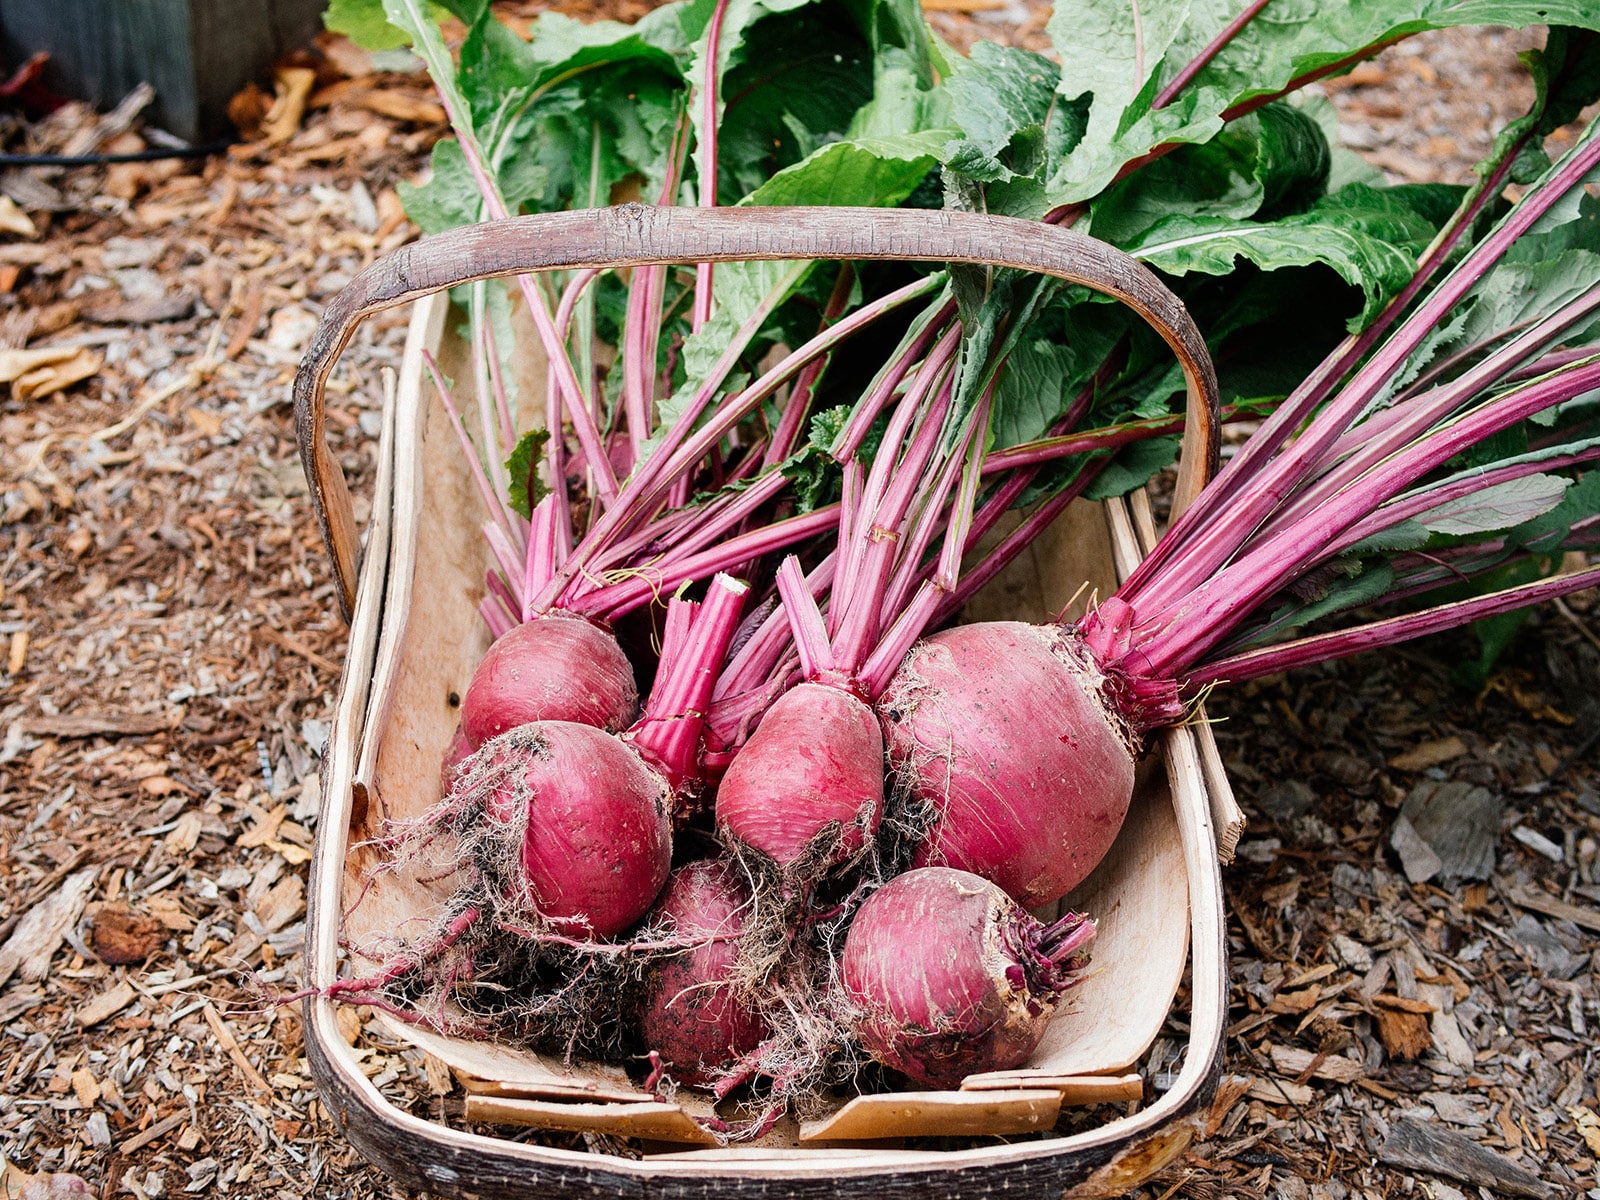 Freshly harvested reddish-purple turnips in a wooden basket